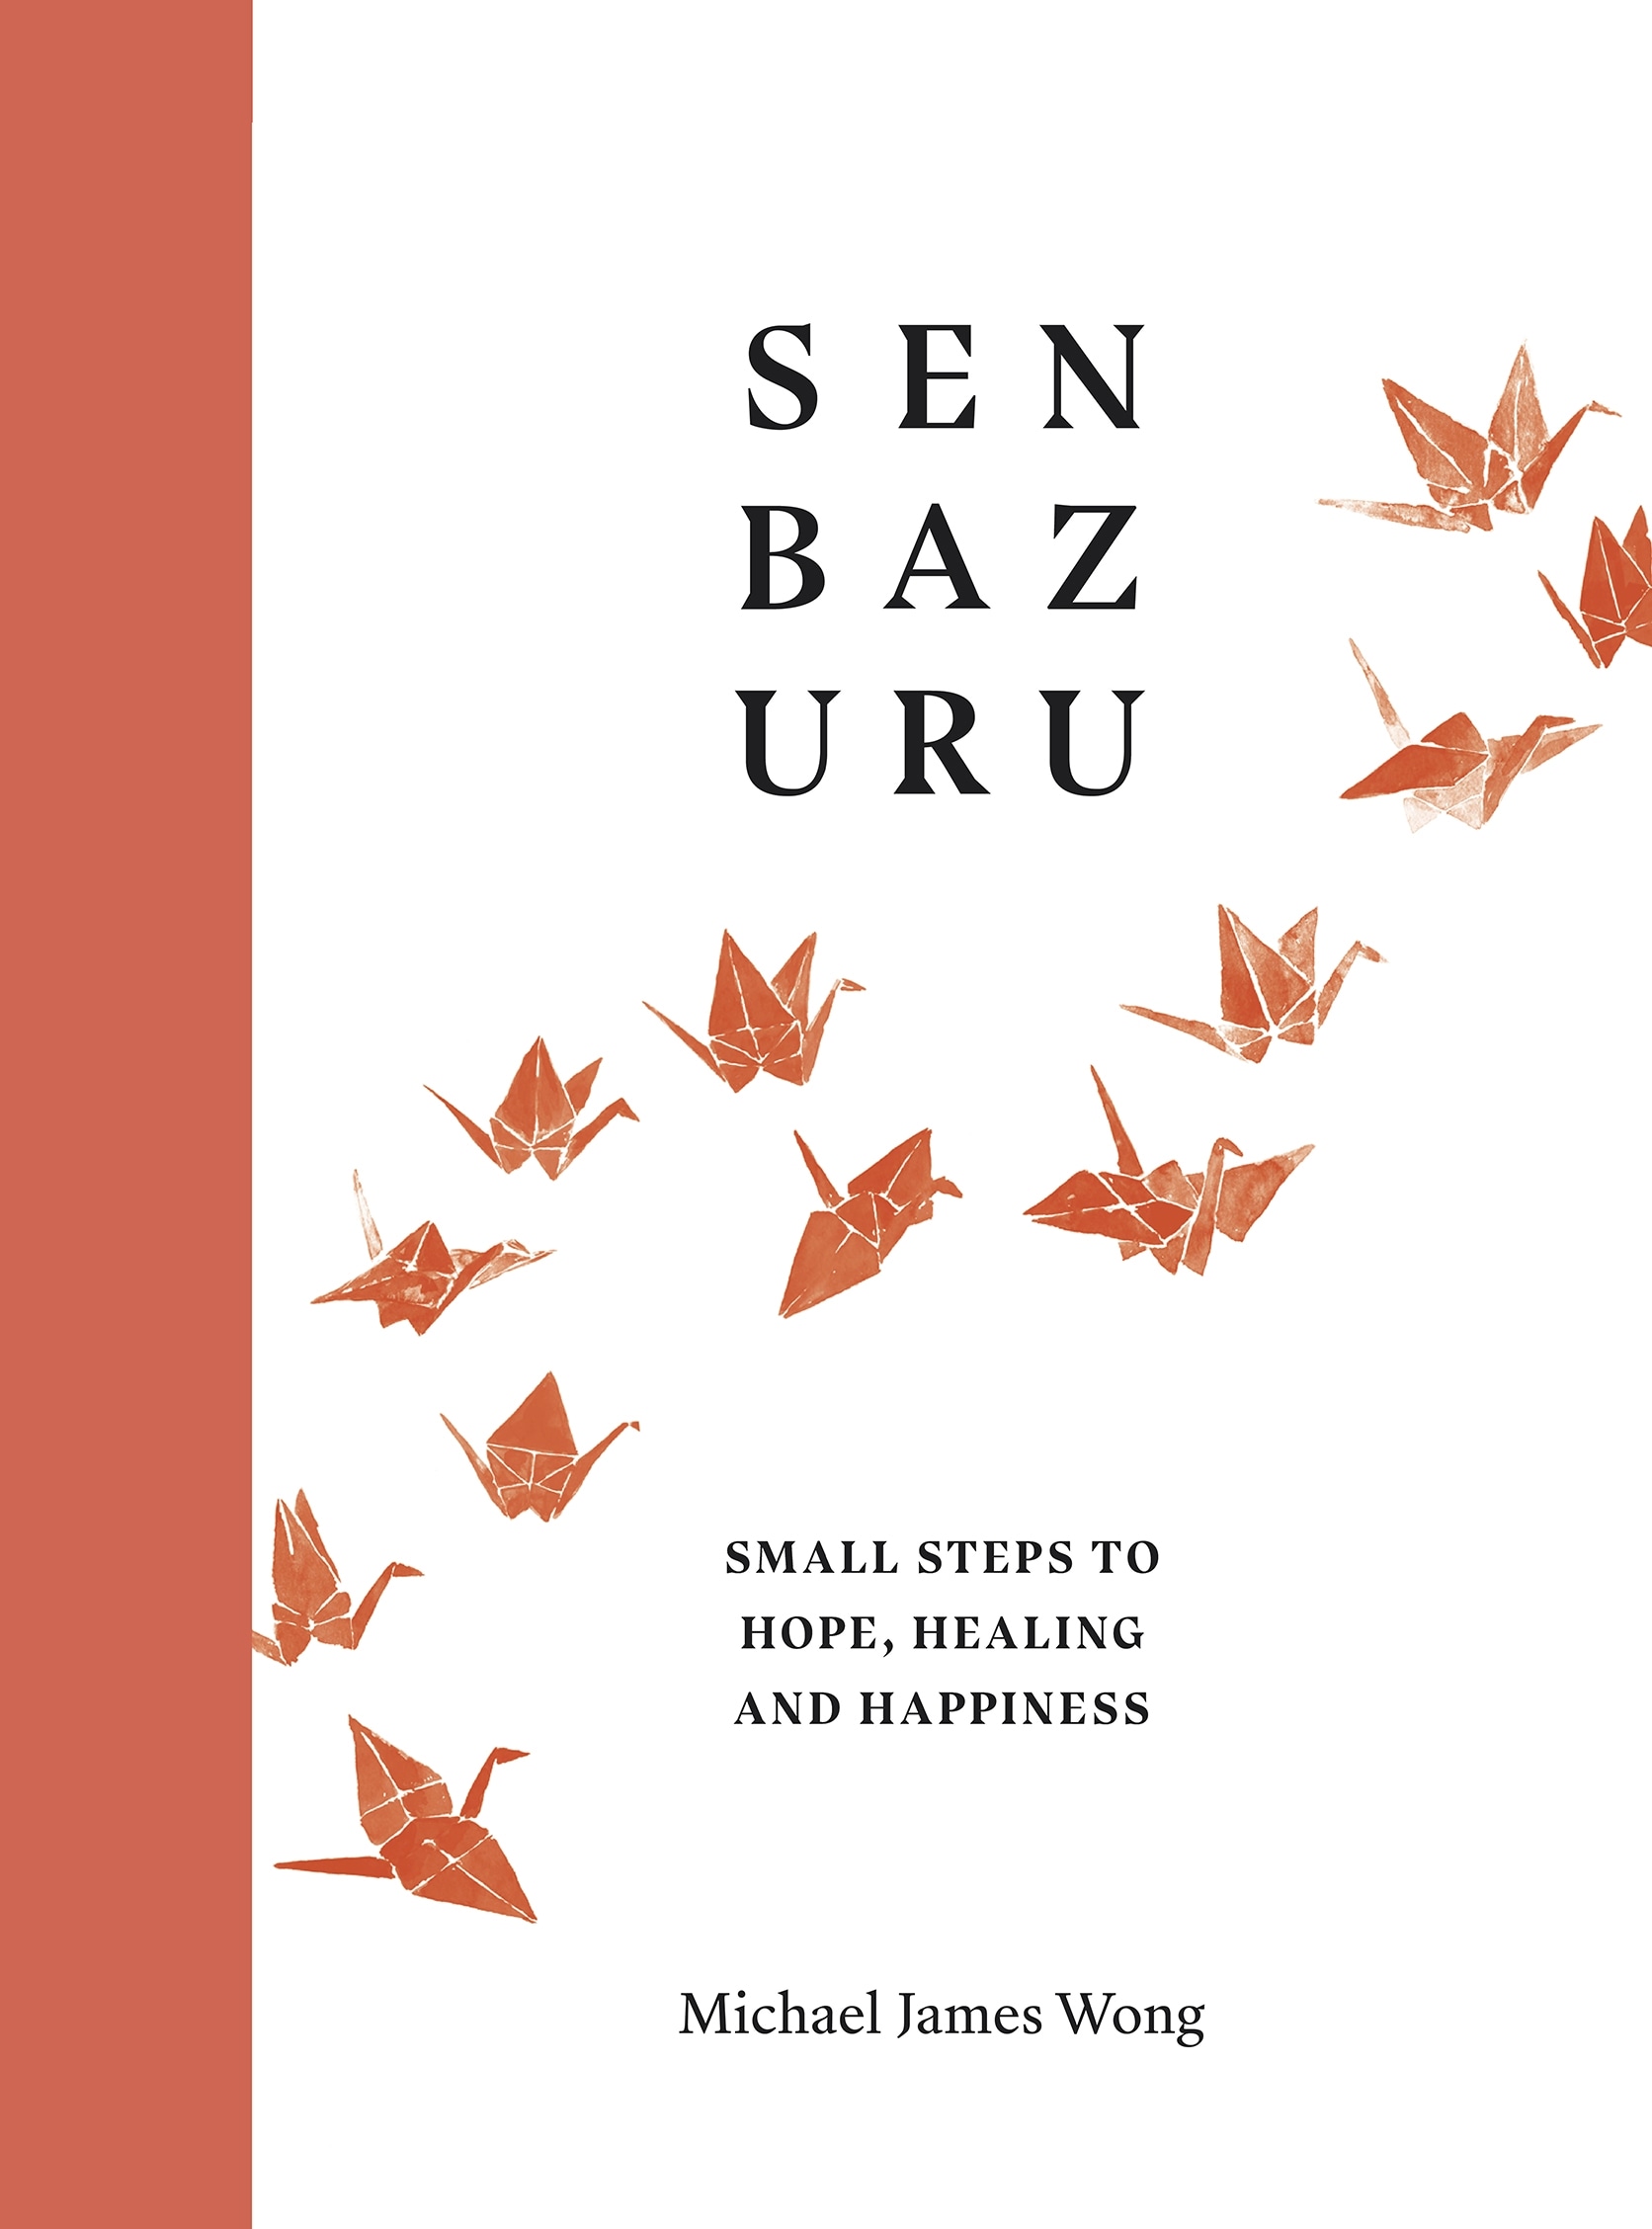 Book “Senbazuru” by Michael James Wong — May 27, 2021